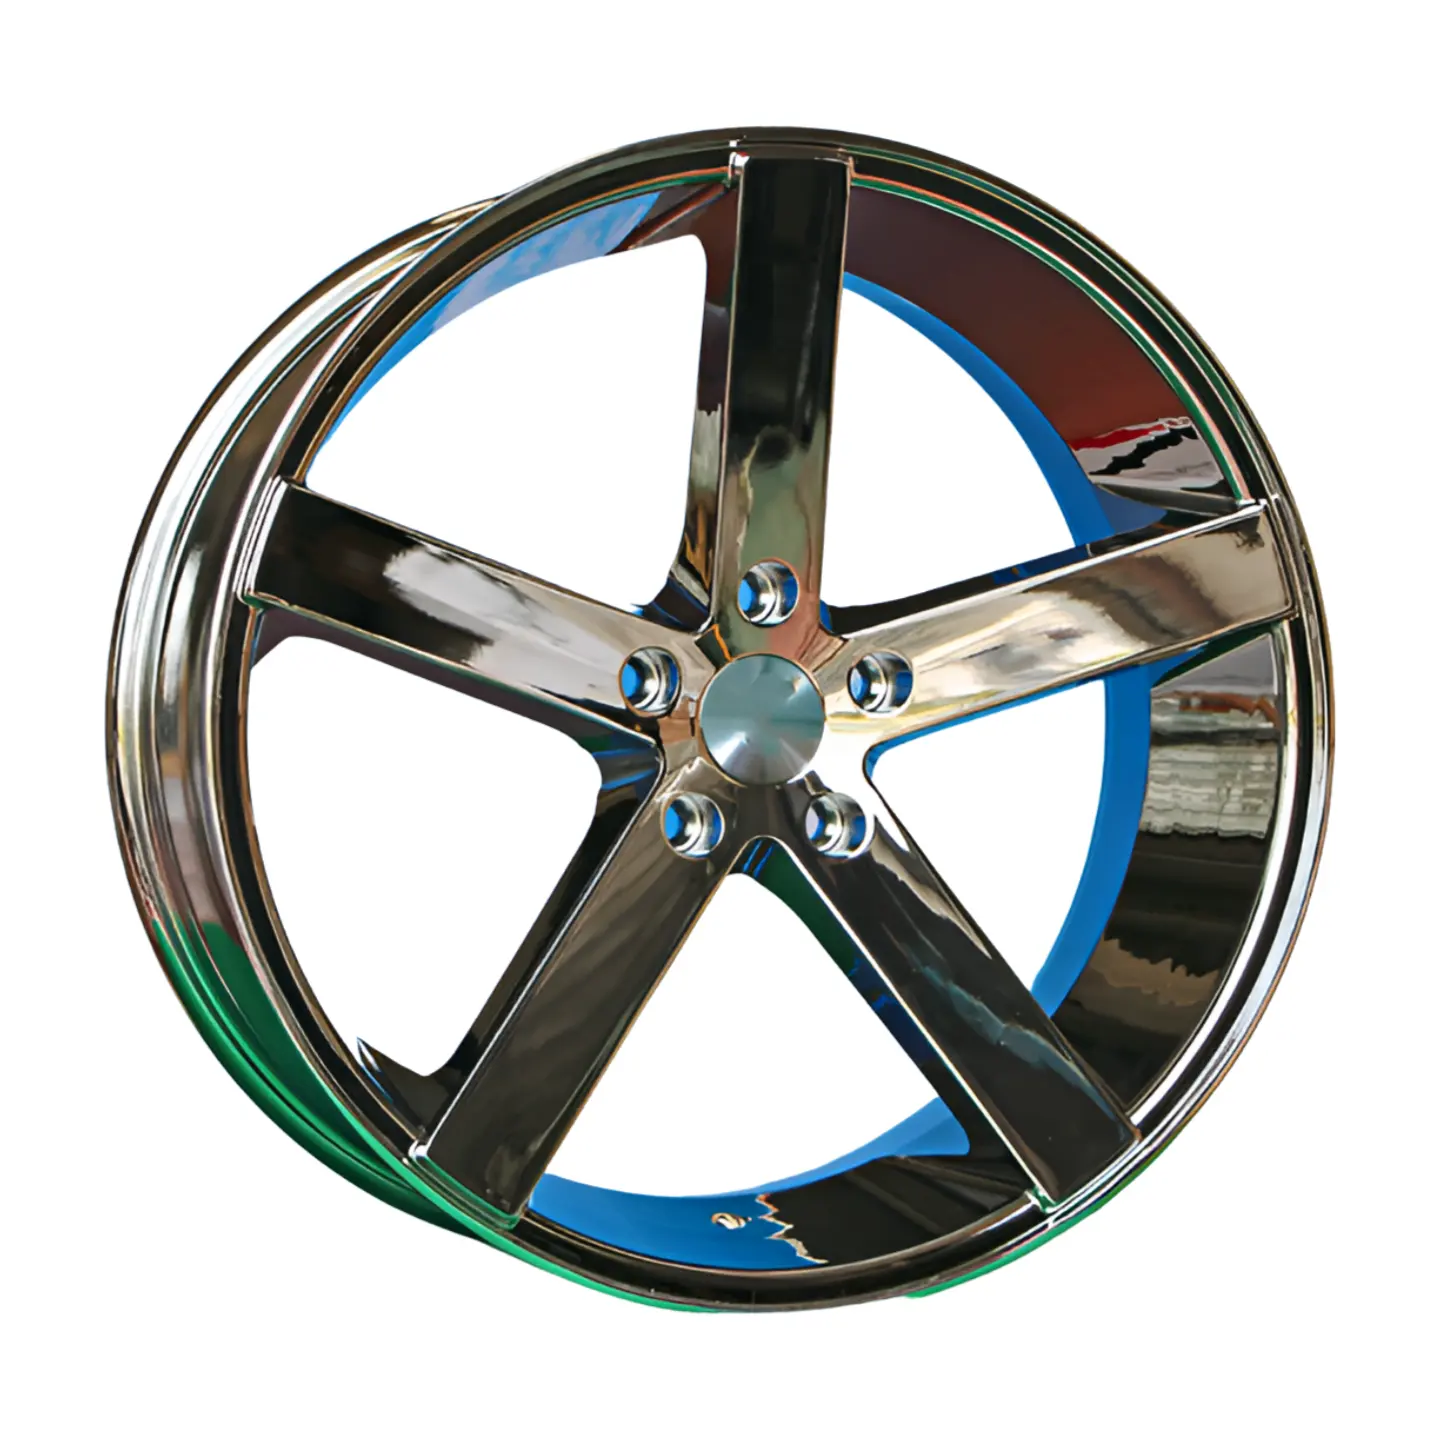 Jy 20 22 inch rims 5 hole new chrome plated aluminum alloy wheels suitable for passenger car wheels